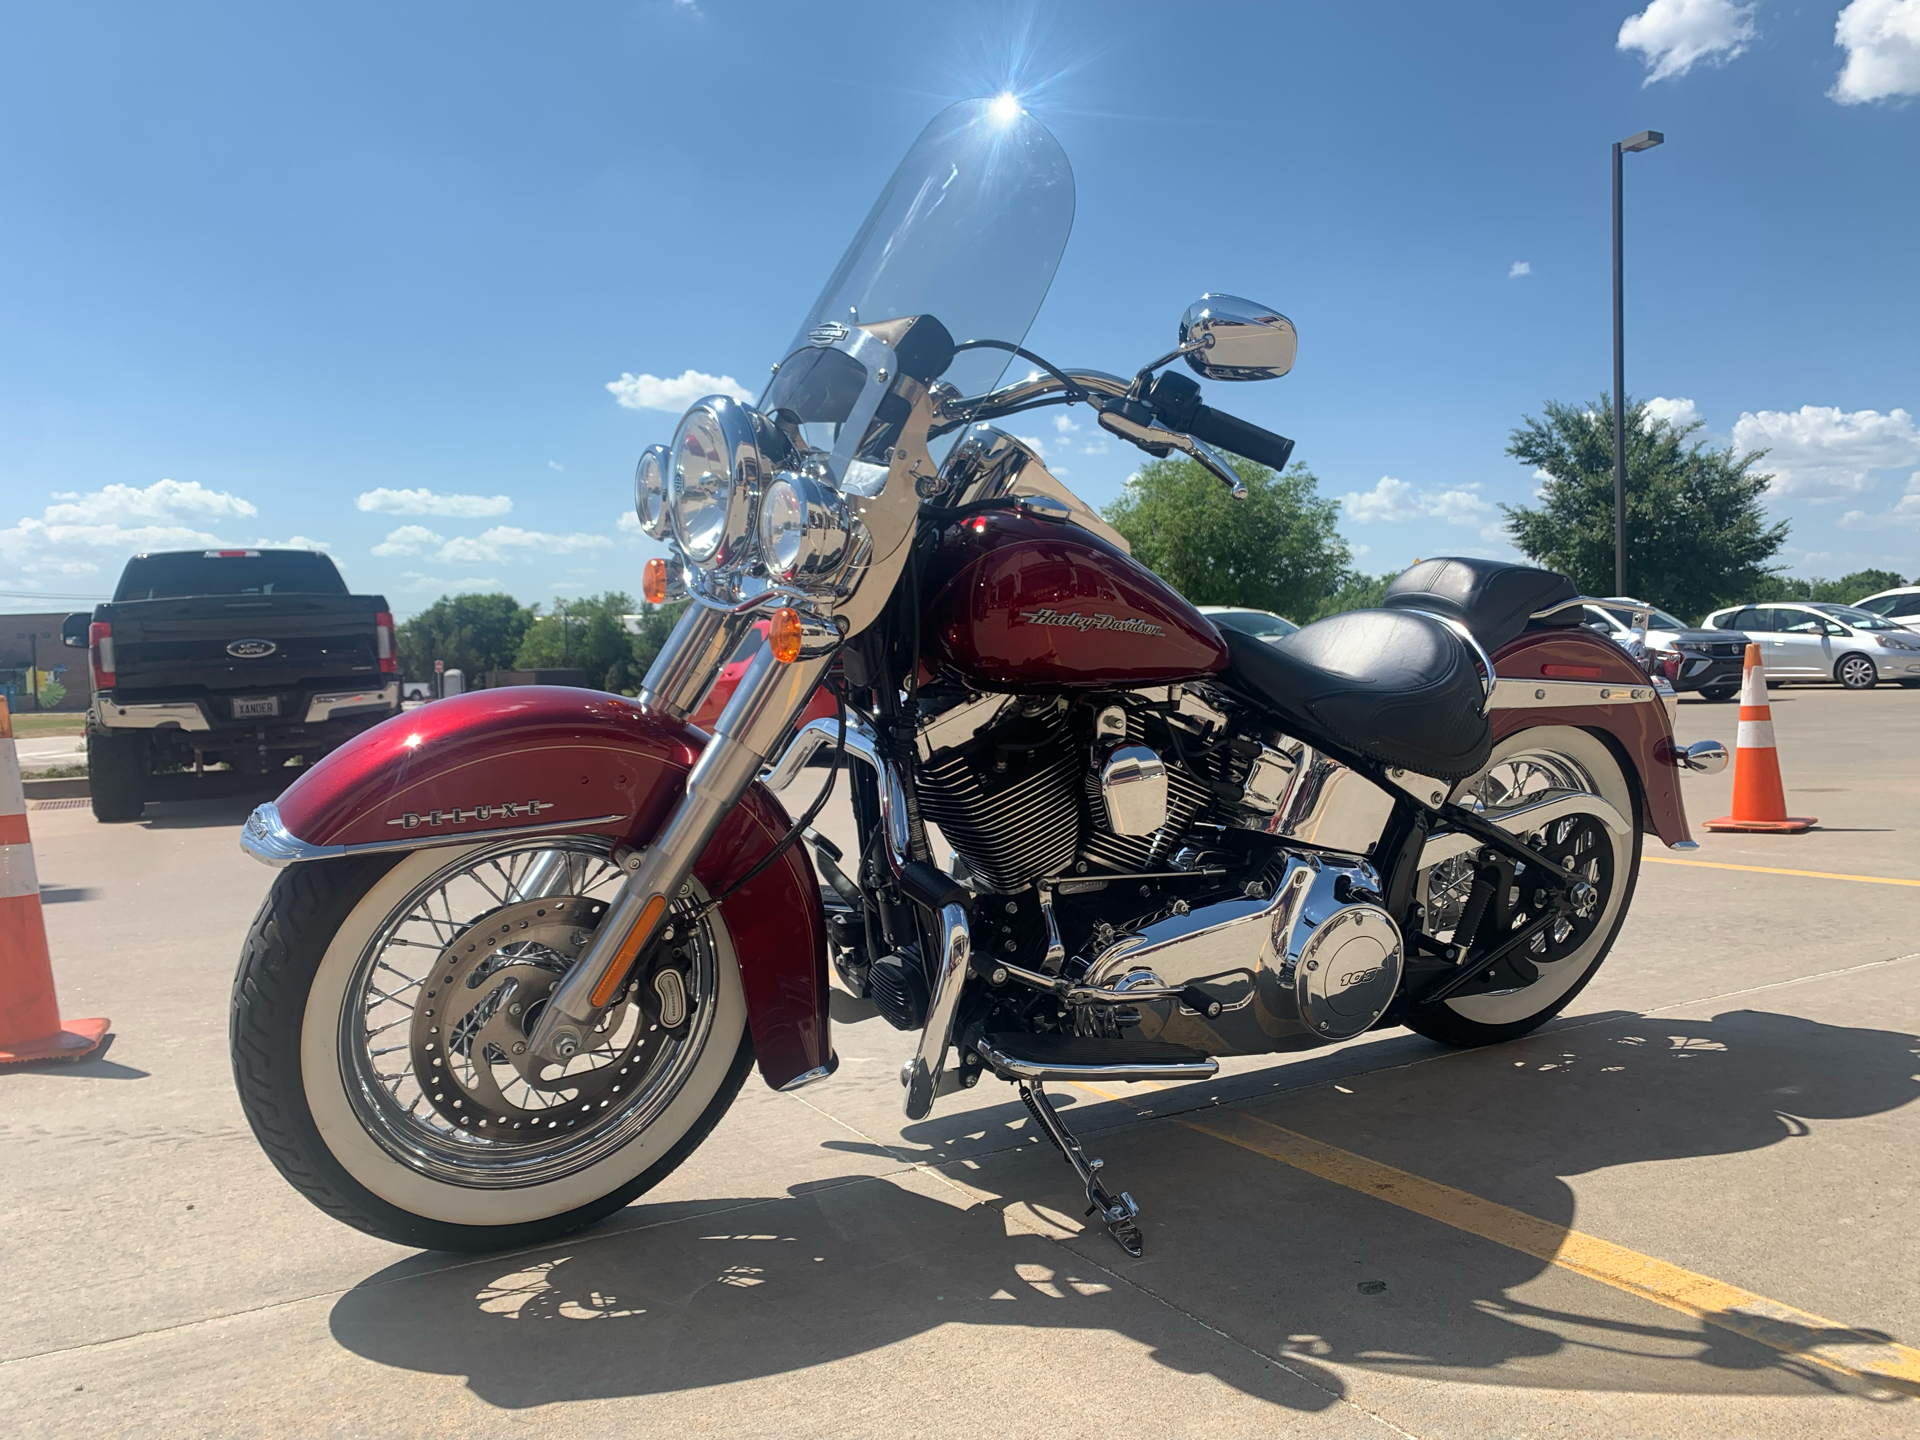 2017 Harley-Davidson Softail® Deluxe in Norman, Oklahoma - Photo 4